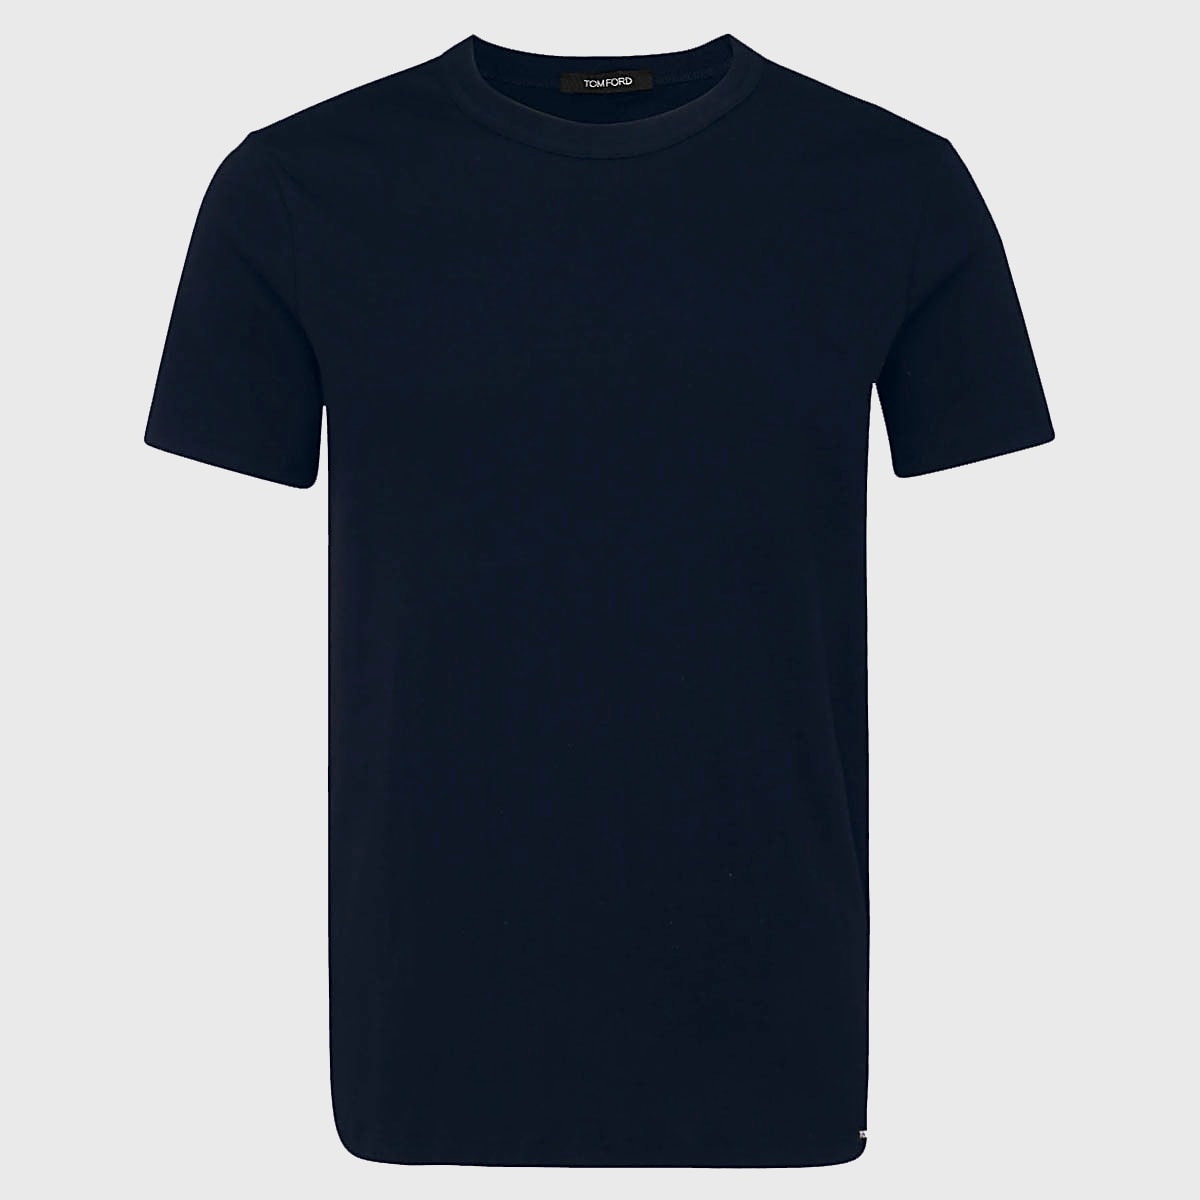 Tom Ford Navy Blue Cotton Blend T-shirt